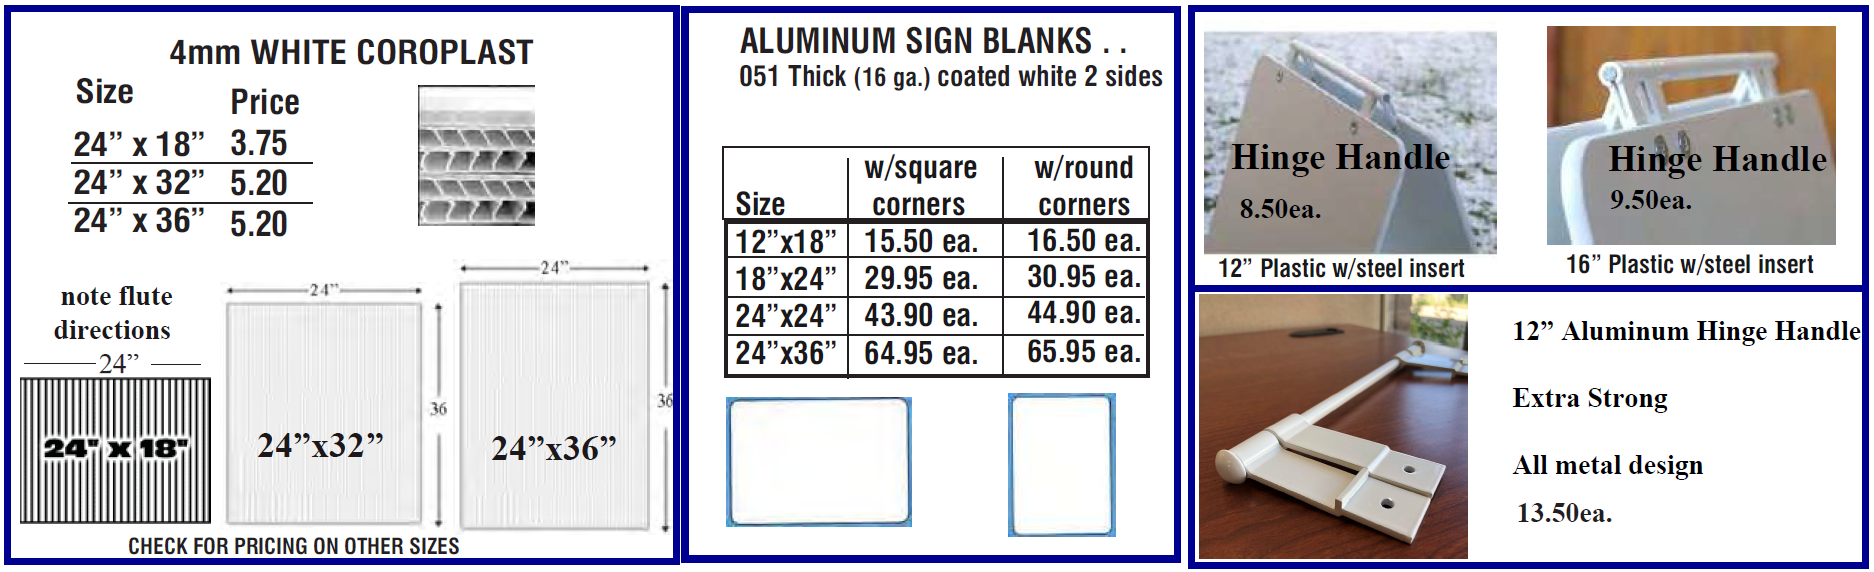 sign blanks and hinge handles apr 2023 - Sign Blanks -  "Coroplast" -  Hinge Handle  - Aluminum Blanks